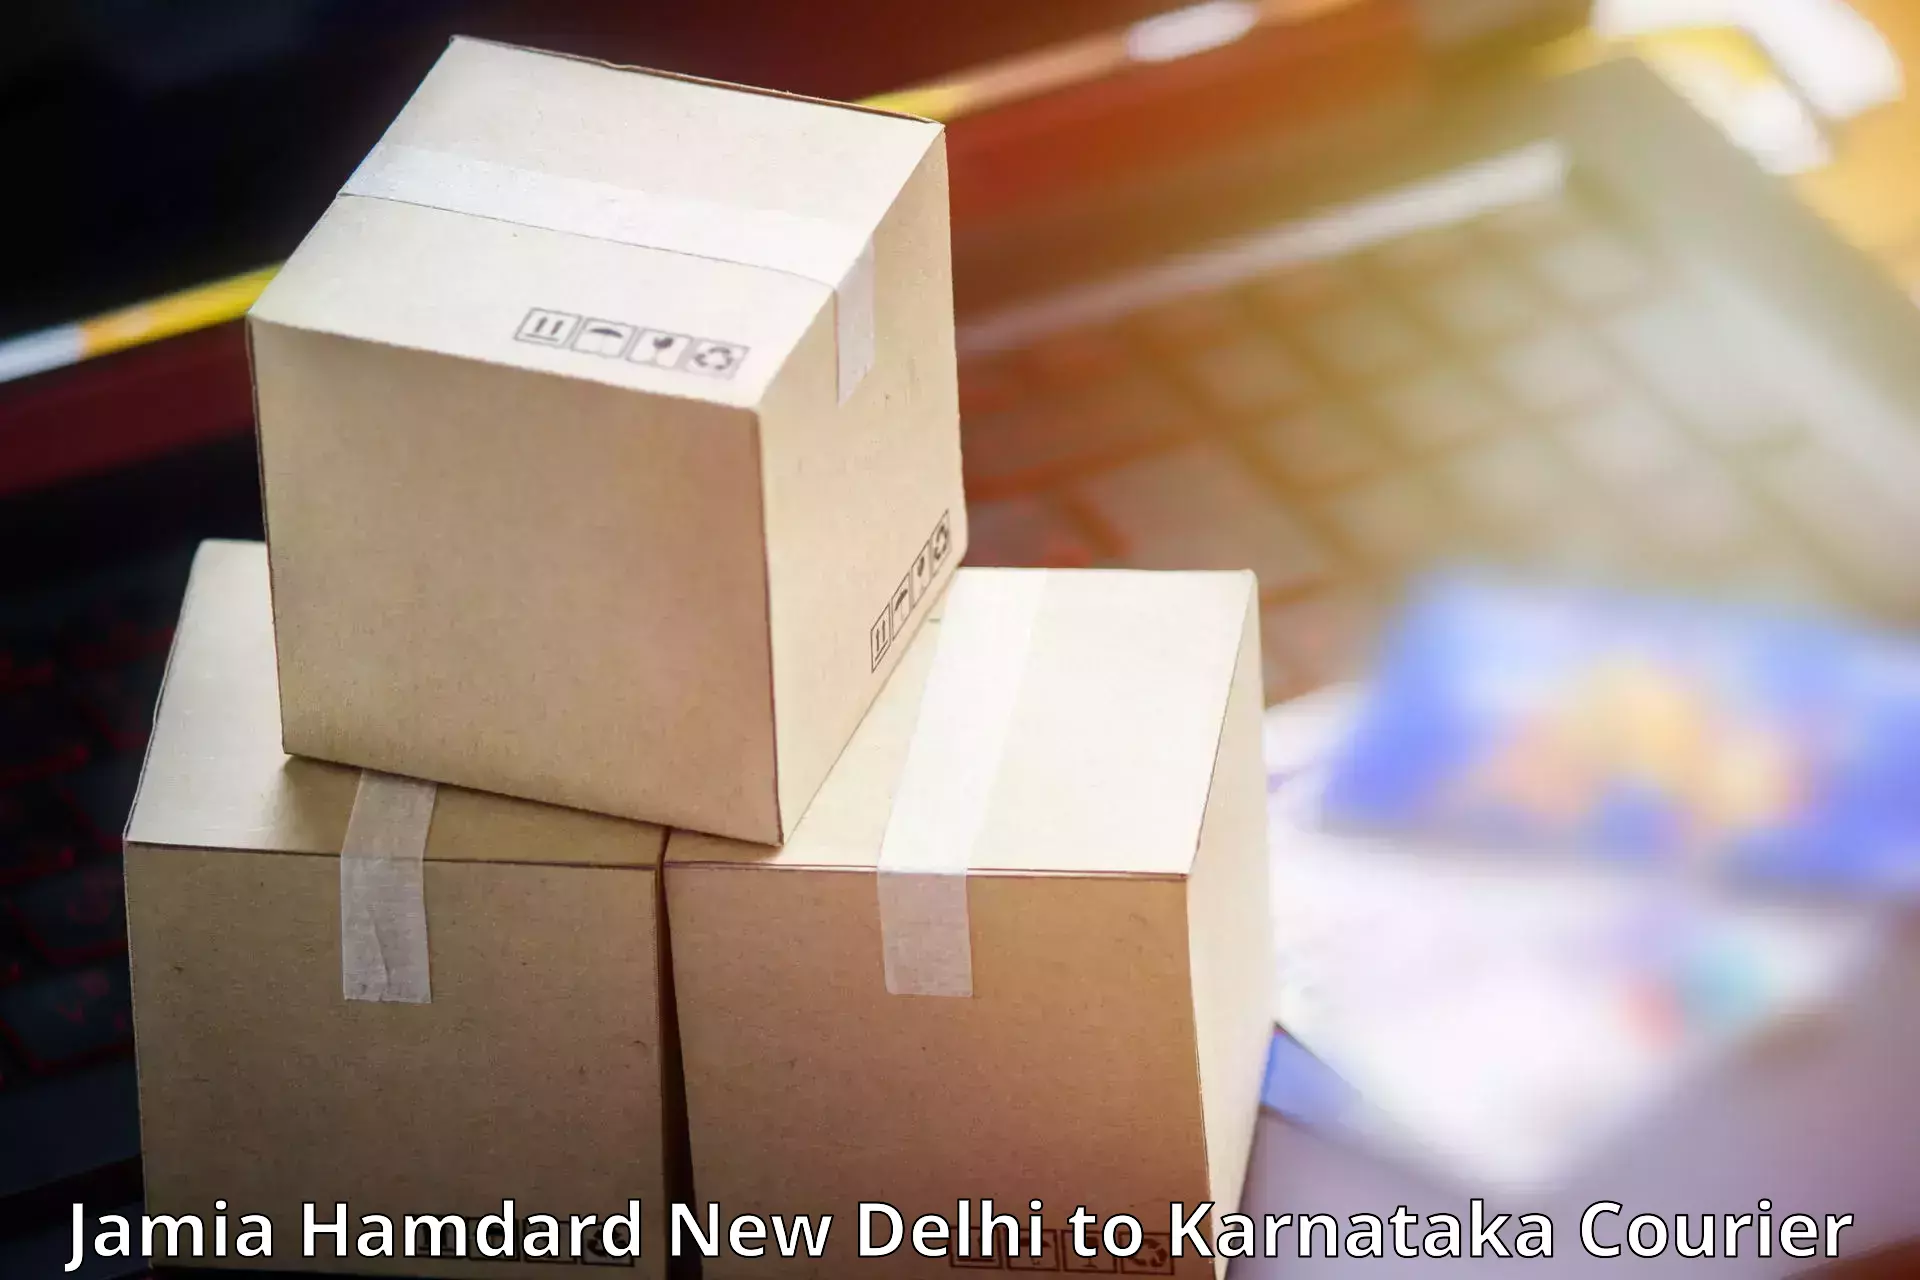 Express delivery capabilities Jamia Hamdard New Delhi to Bengaluru